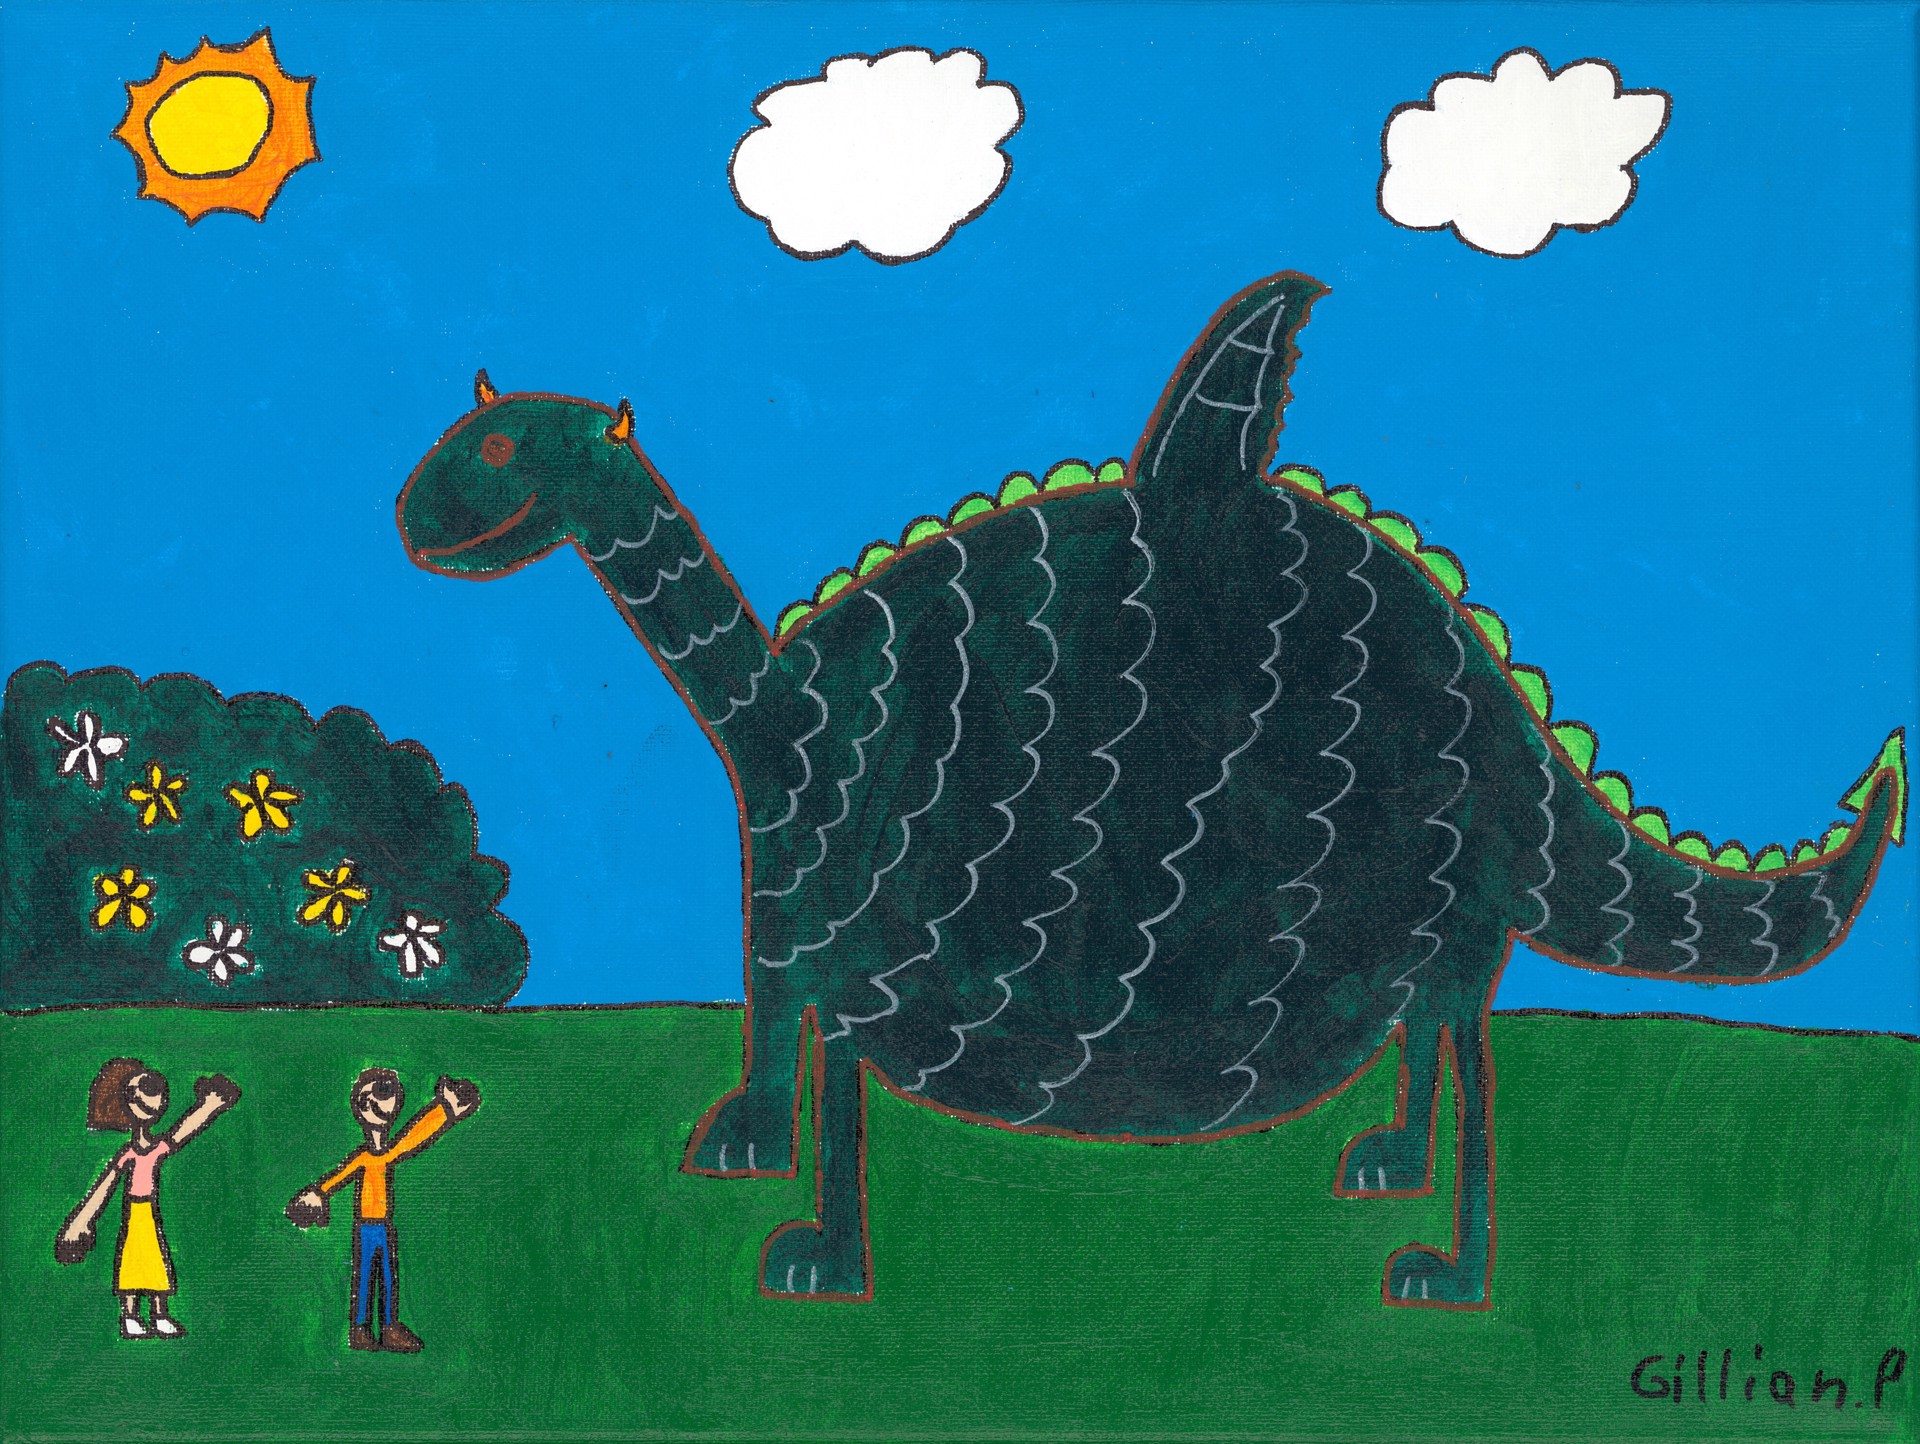 The Big Friendly Dragon by Gillian Patterson